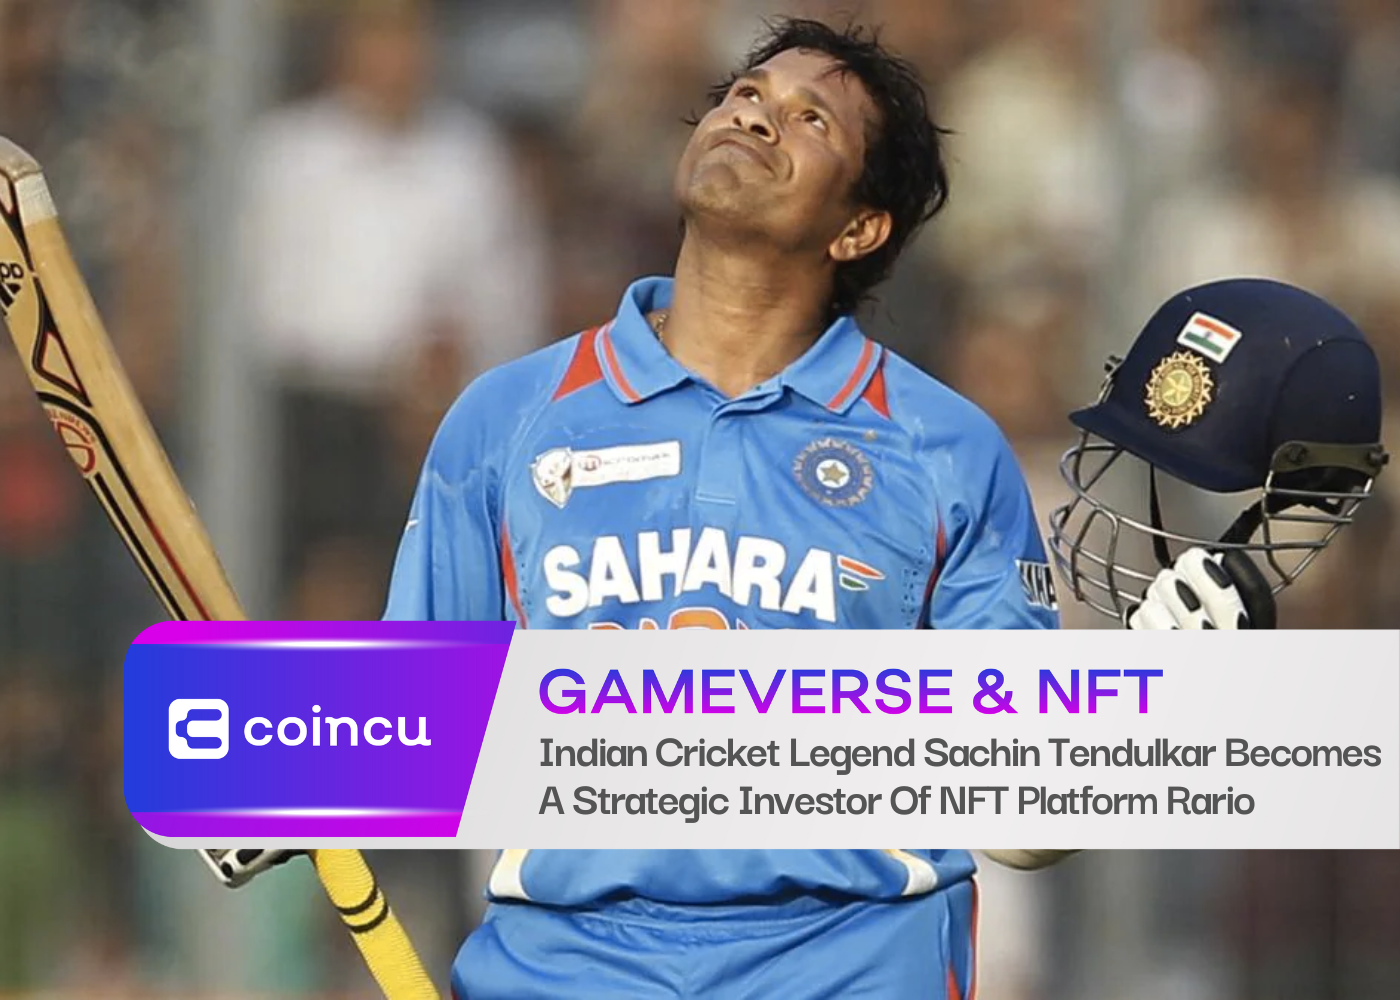 Indian Cricket Legend Sachin Tendulkar Becomes A Strategic Investor Of NFT Platform Rario